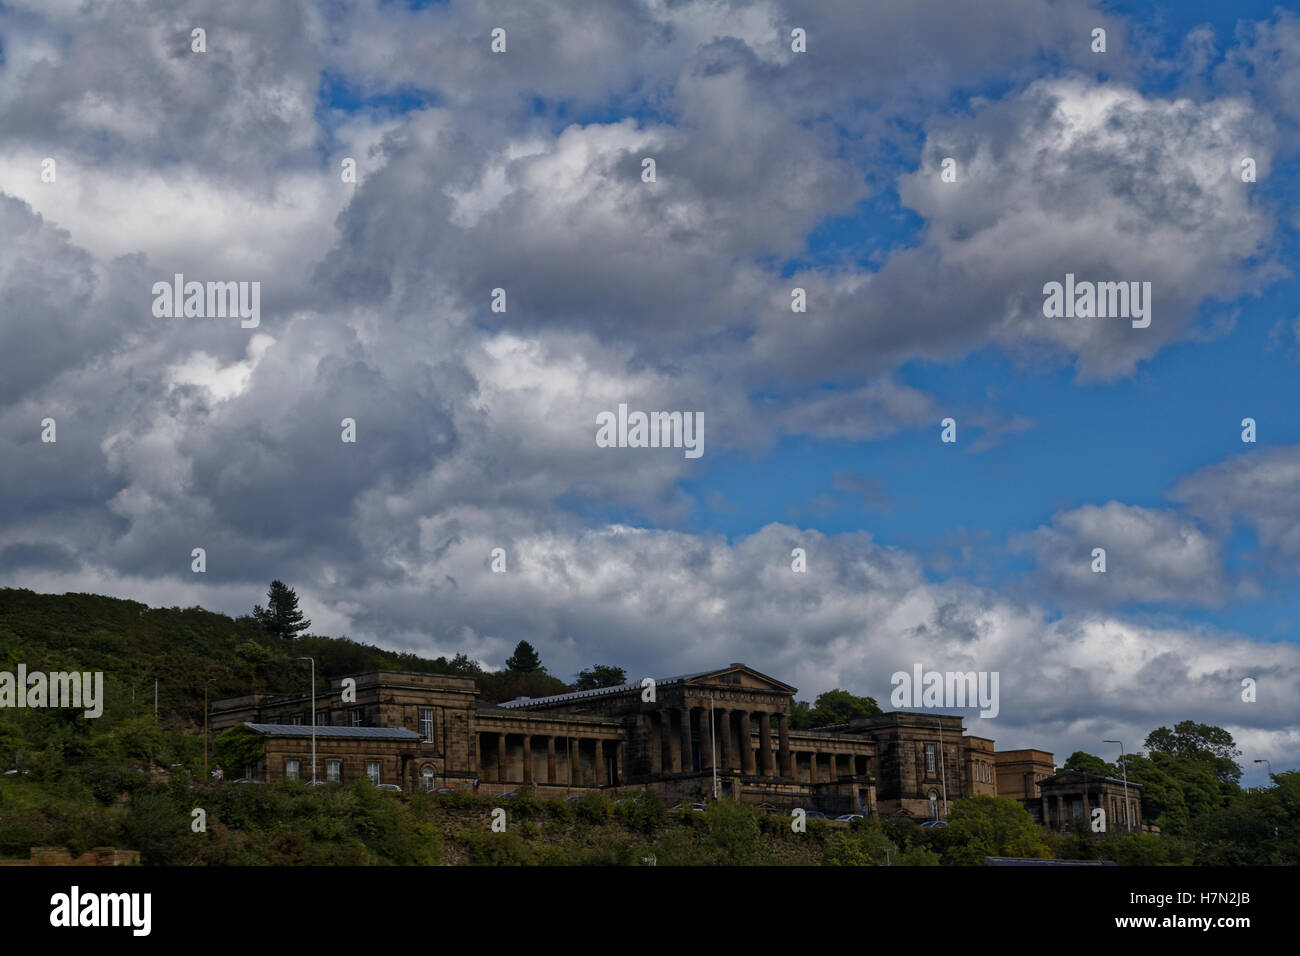 Calton Hill Edinburgh Stock Photo